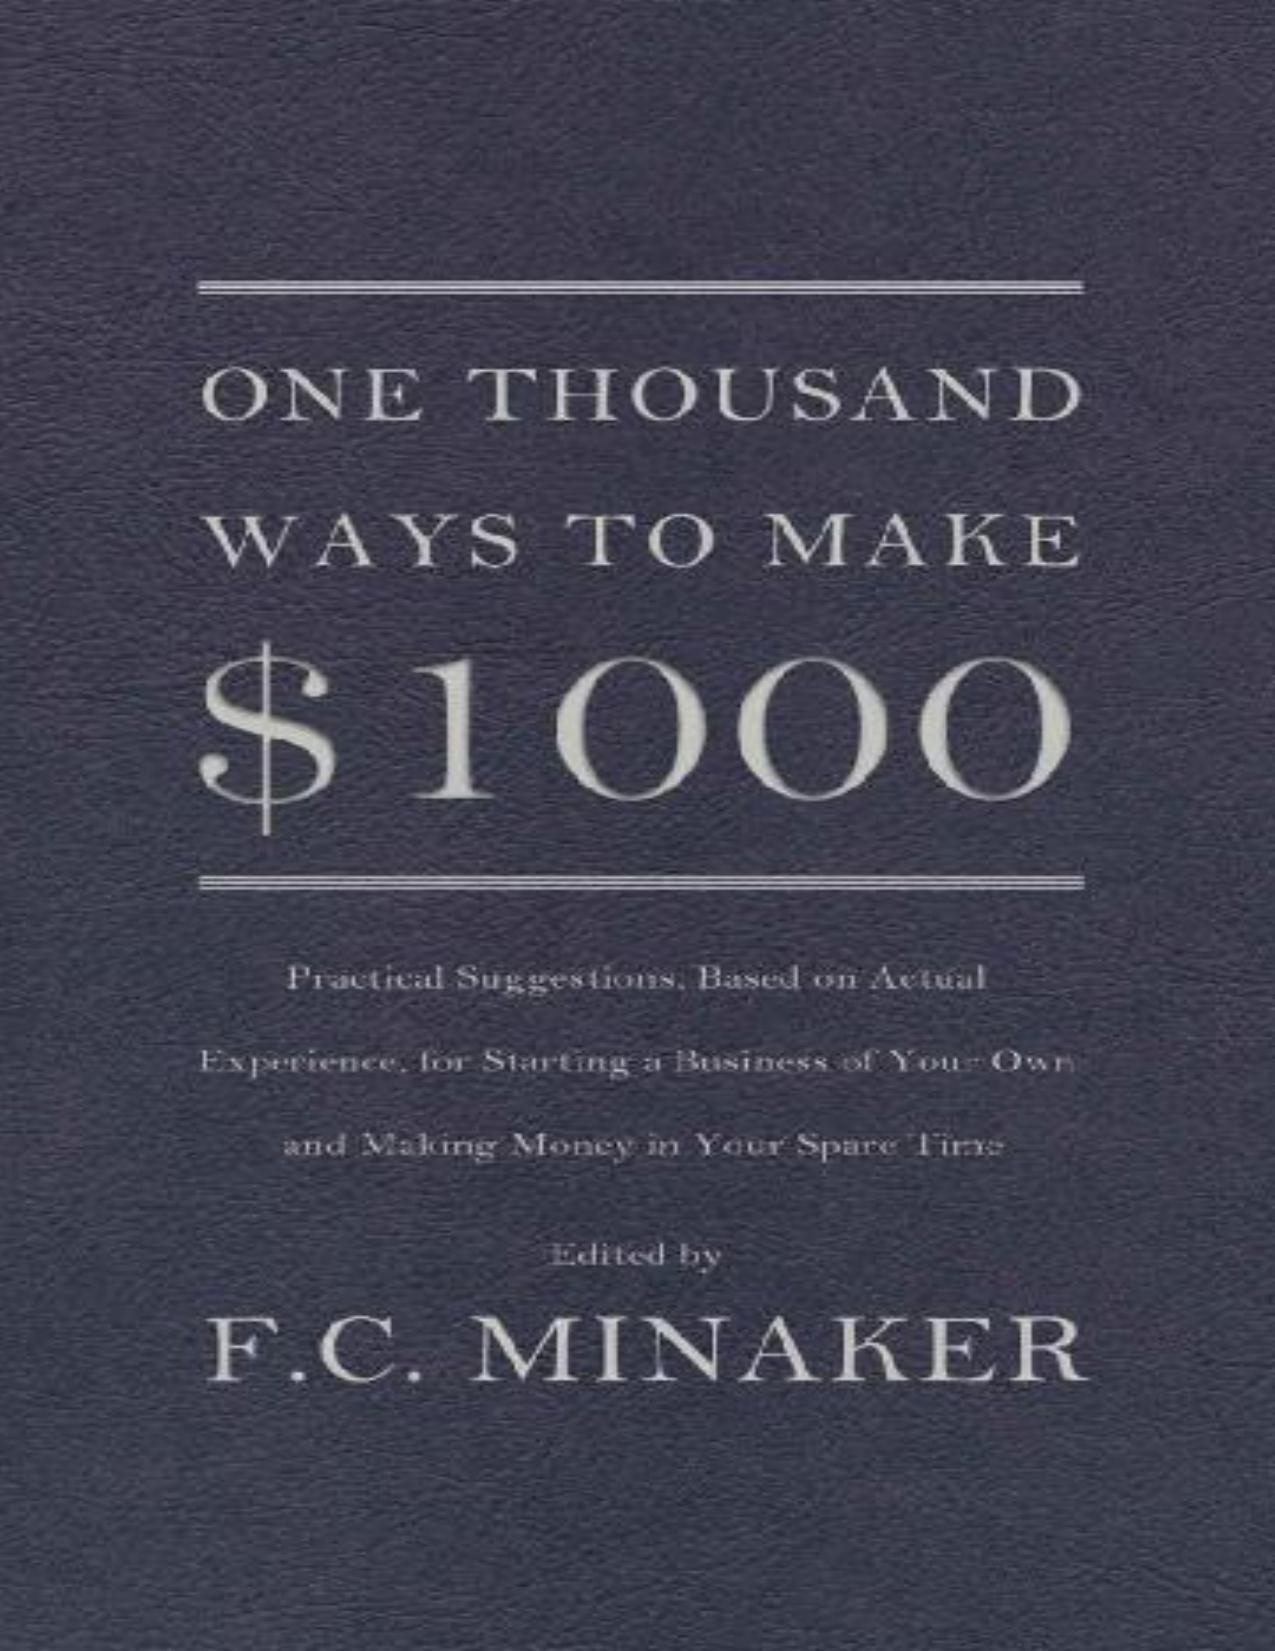 One Thousand Ways to Make $1000 by F.C. Minaker